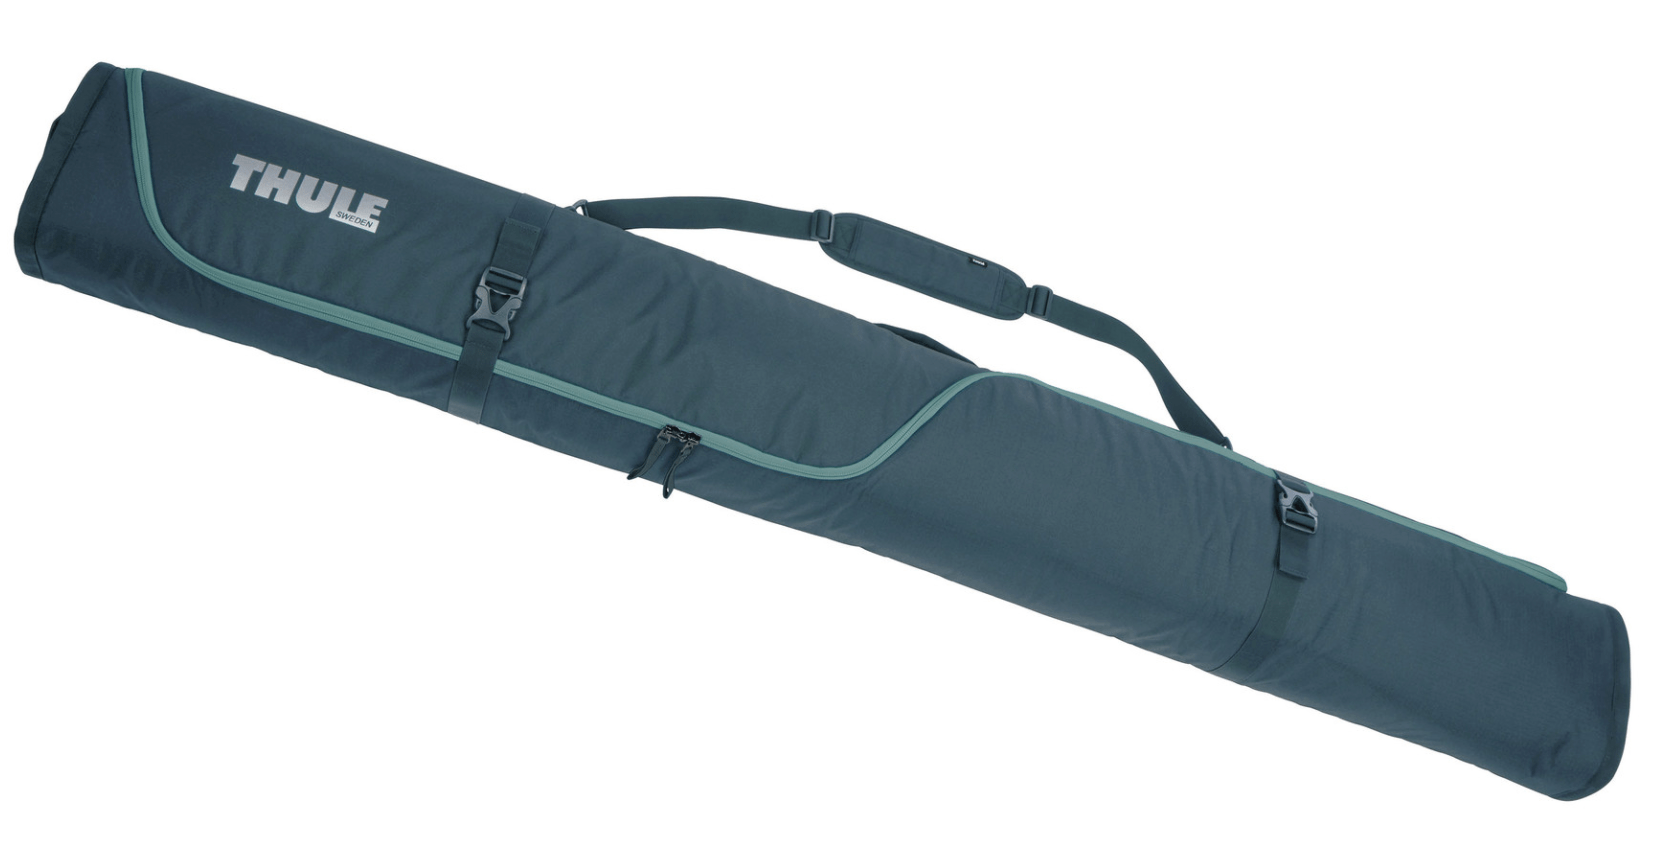 Thule RoundTrip Ski Bag 192cm - Letang Auto Electrical Vehicle Parts